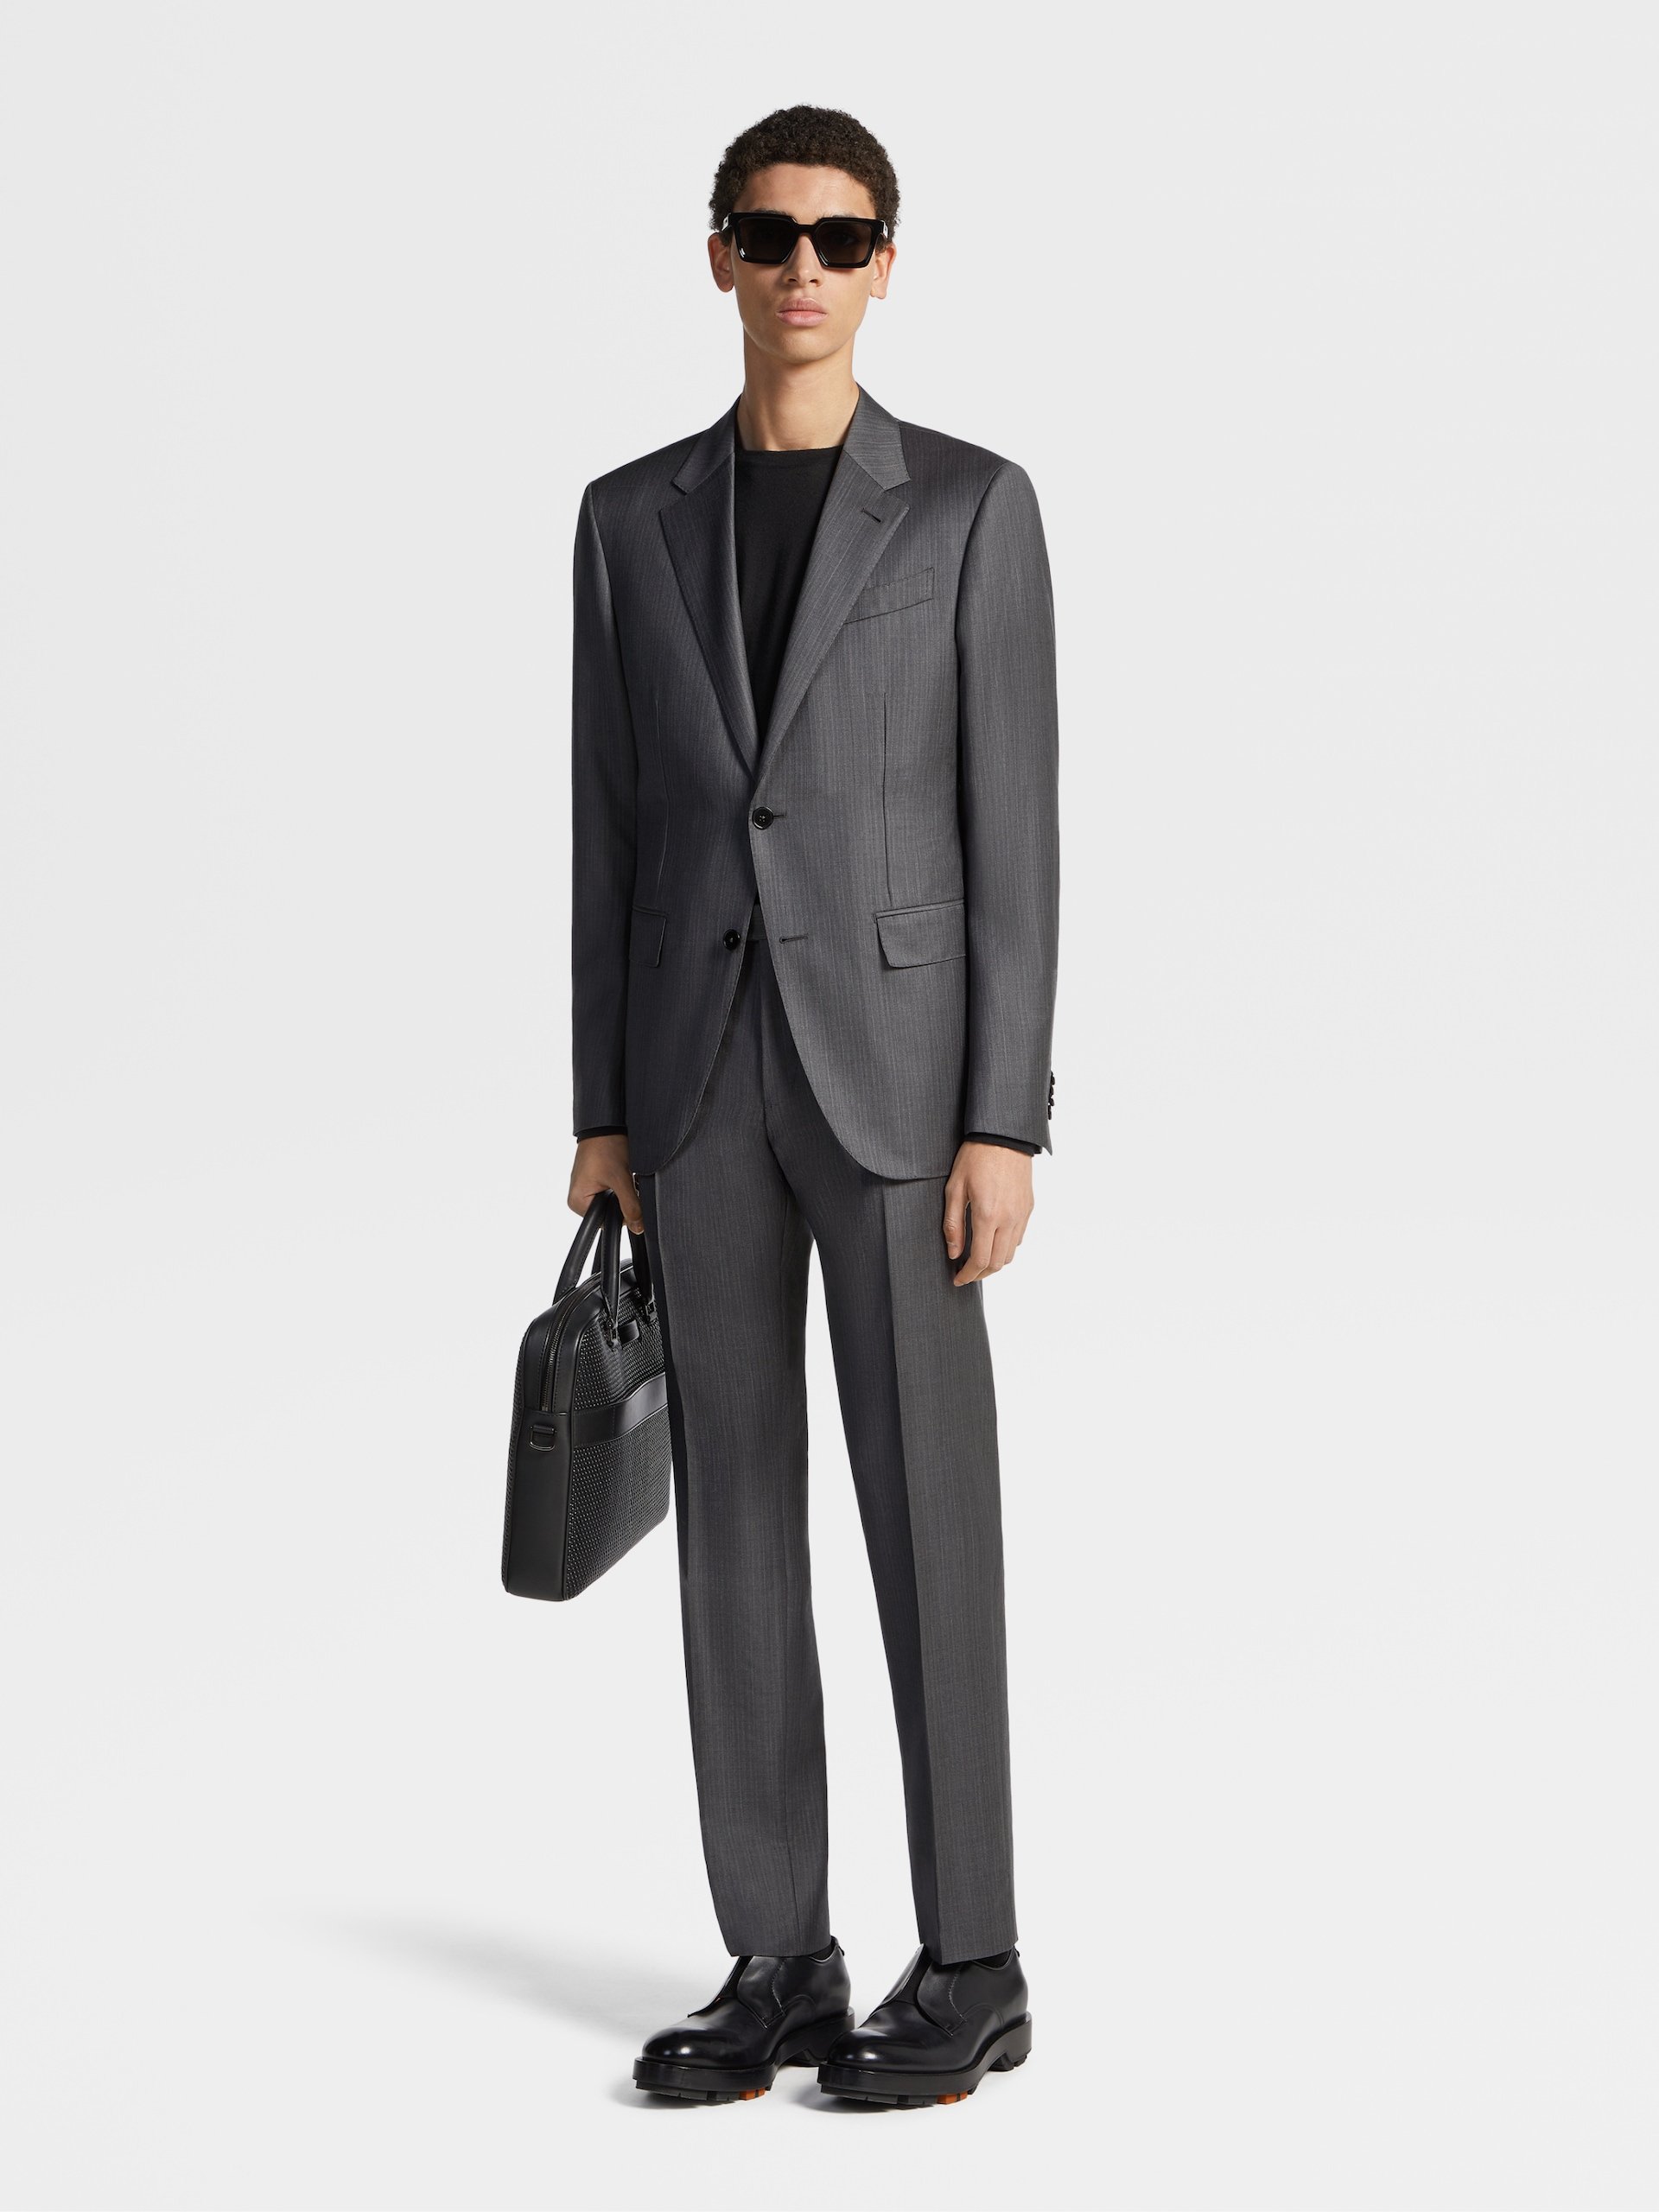 Tailored Suit - Zegna dark grey suit - £2,990